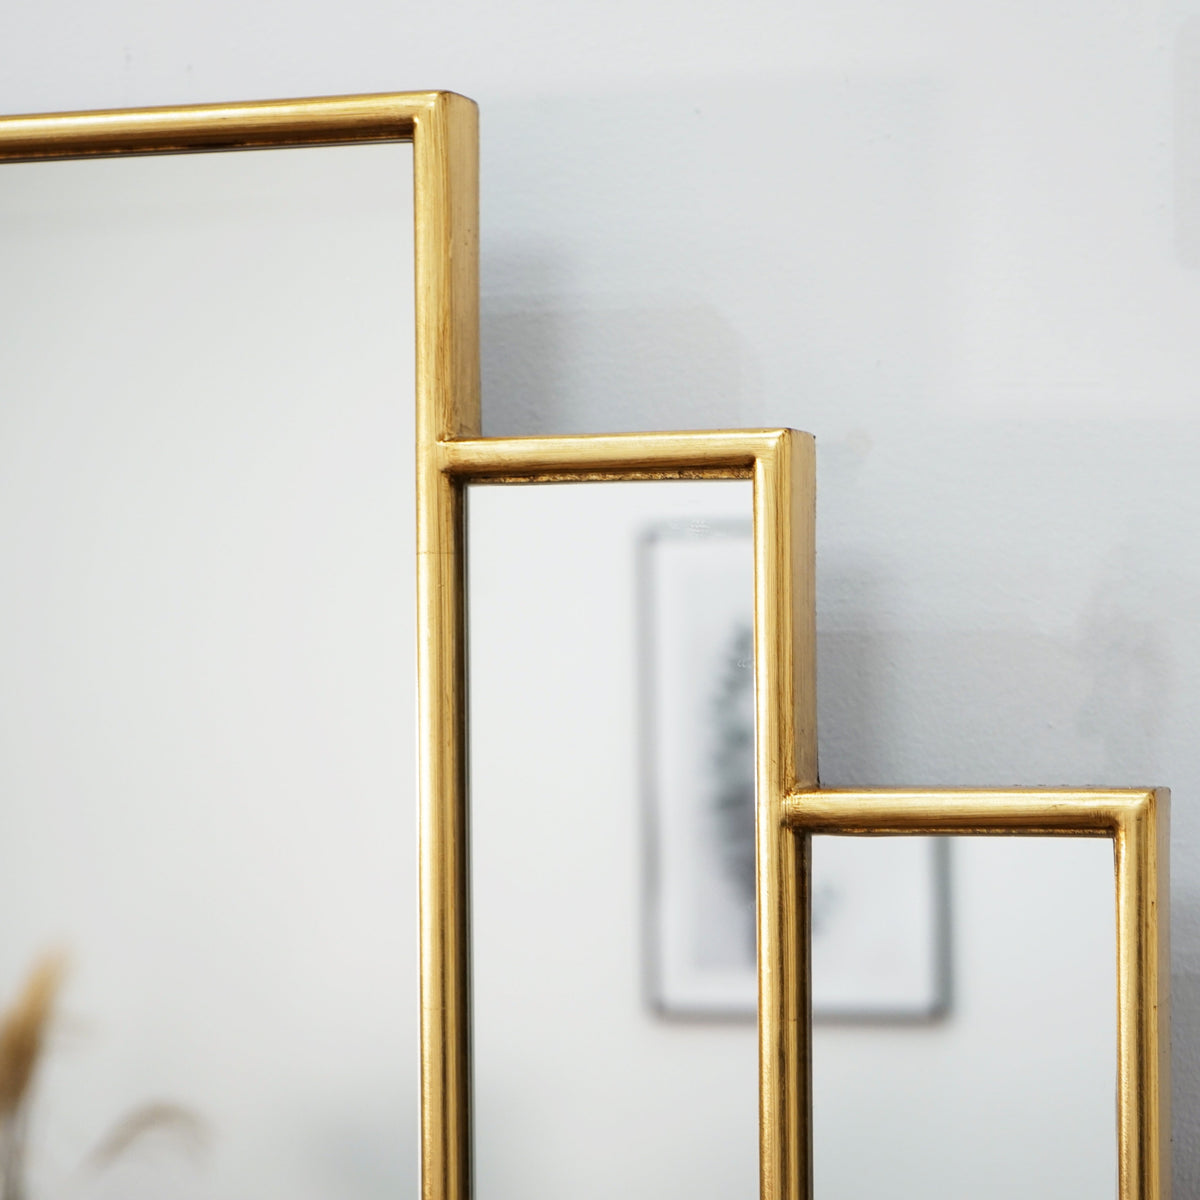 Gold Art Deco Rectangular Wall Mirror detail shot of rectangle design